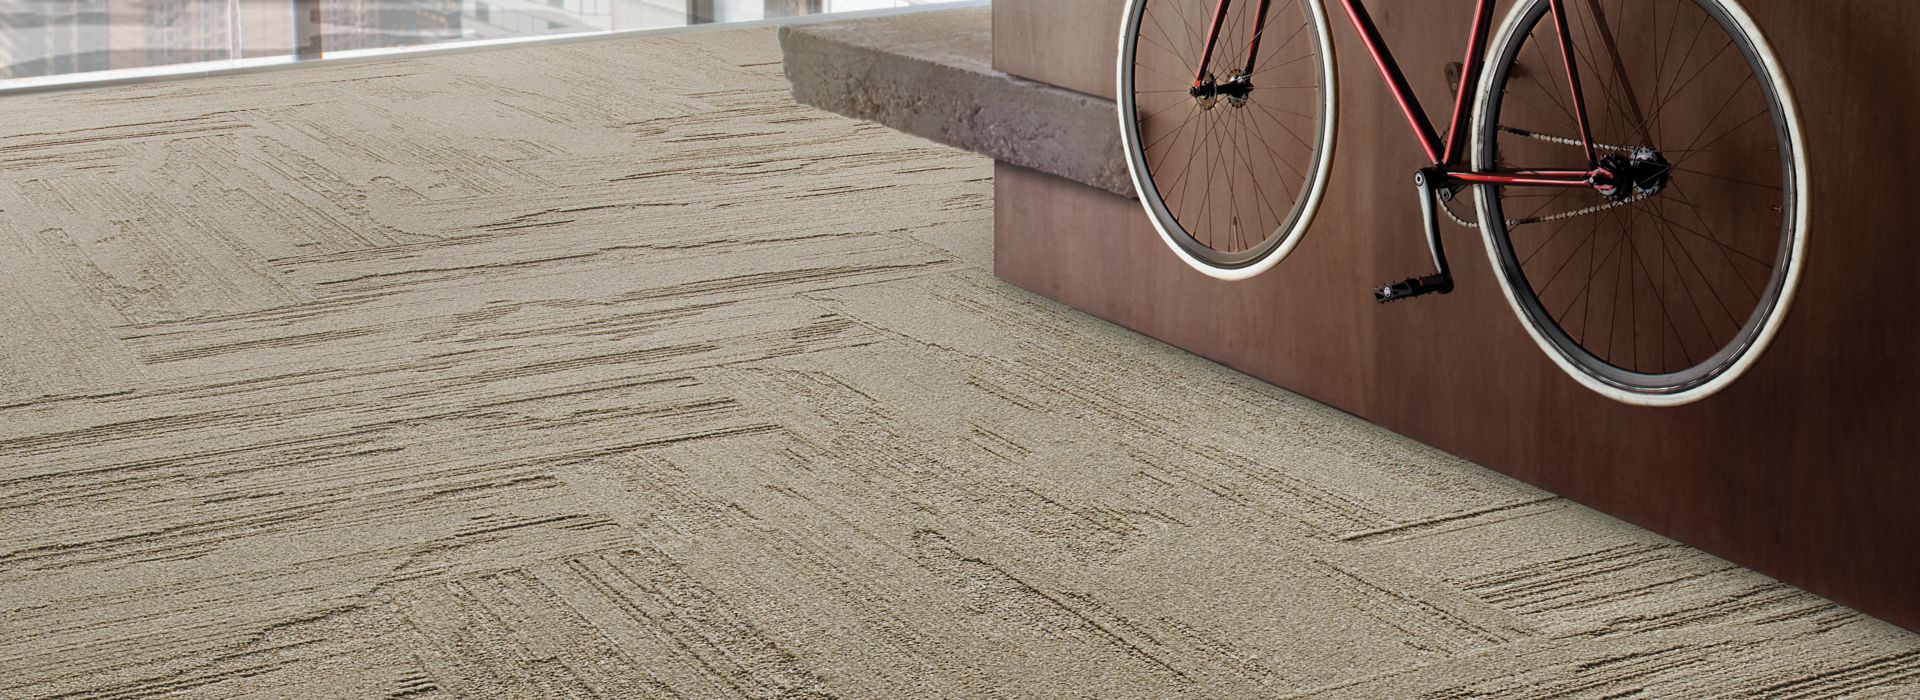 Interface UR501 plank carpet tile in office common area with bike  afbeeldingnummer 1